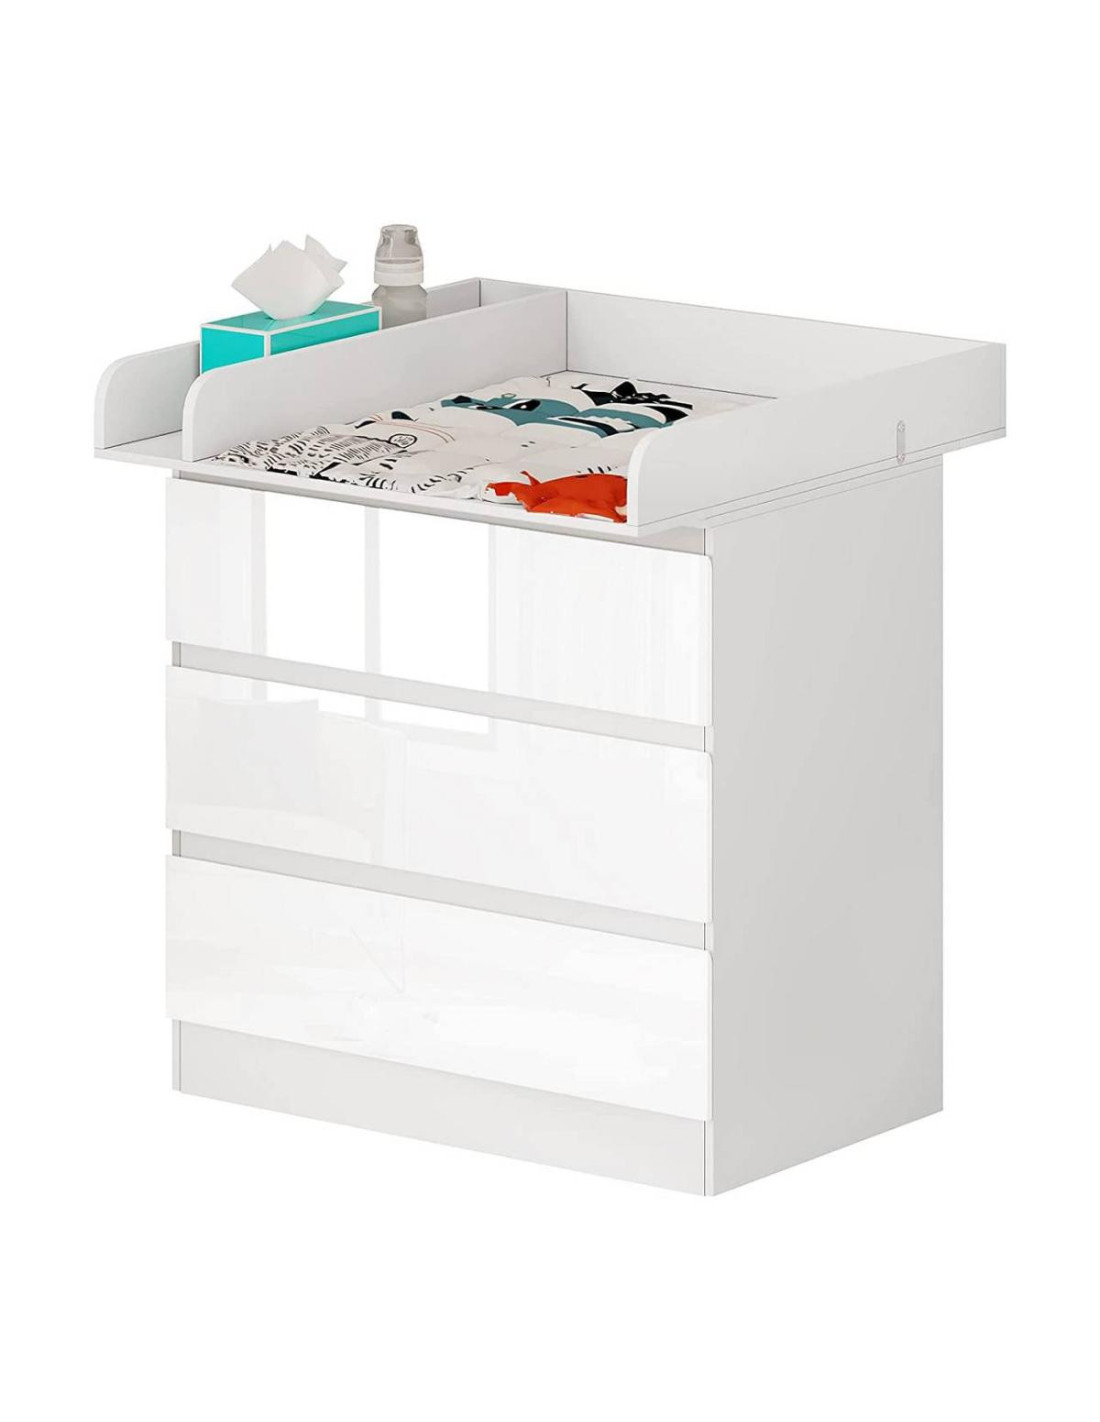 https://images2.cielterre-commerce.fr/40786-thickbox_default/commode-a-langer-3-tiroirs-table-a-langer-blanche-commode-avec-plan-langer-amovible.jpg